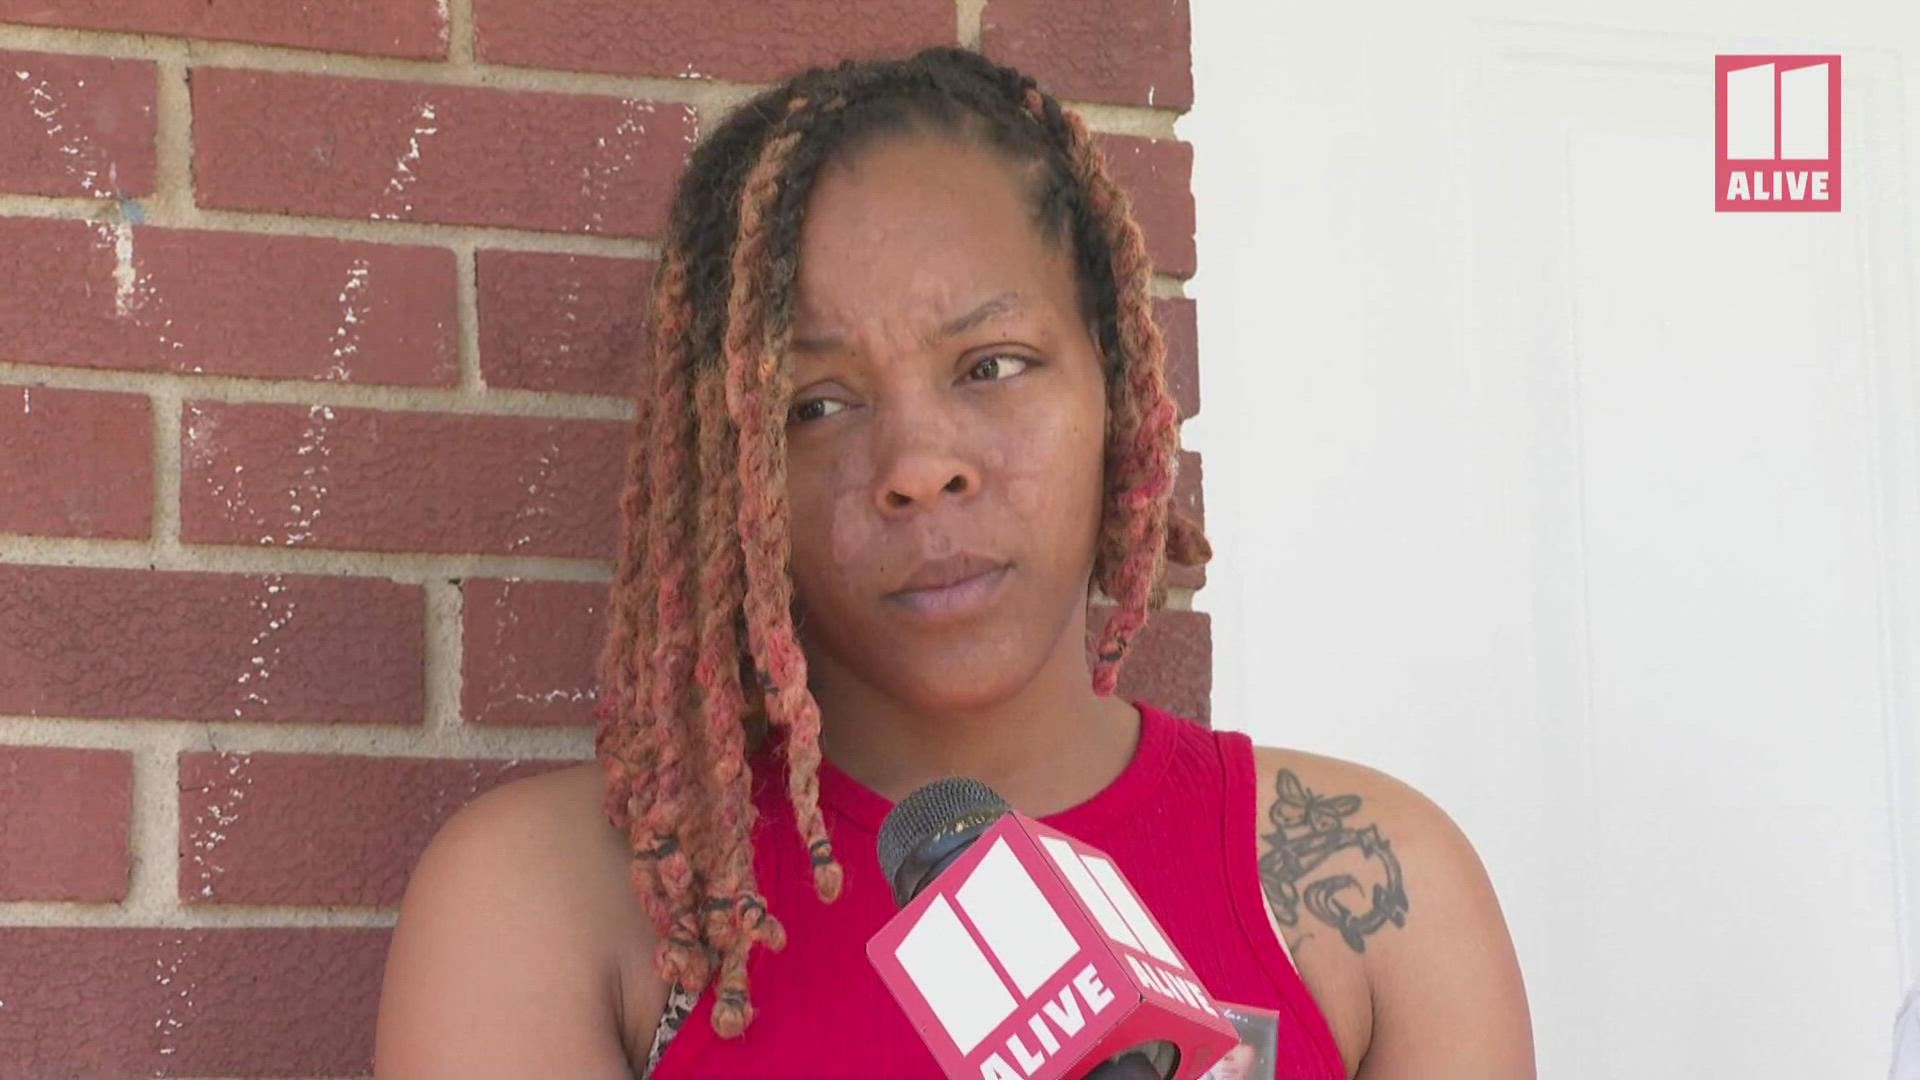 LaKevia Jackson family speaks in Atlanta bowling alley killing